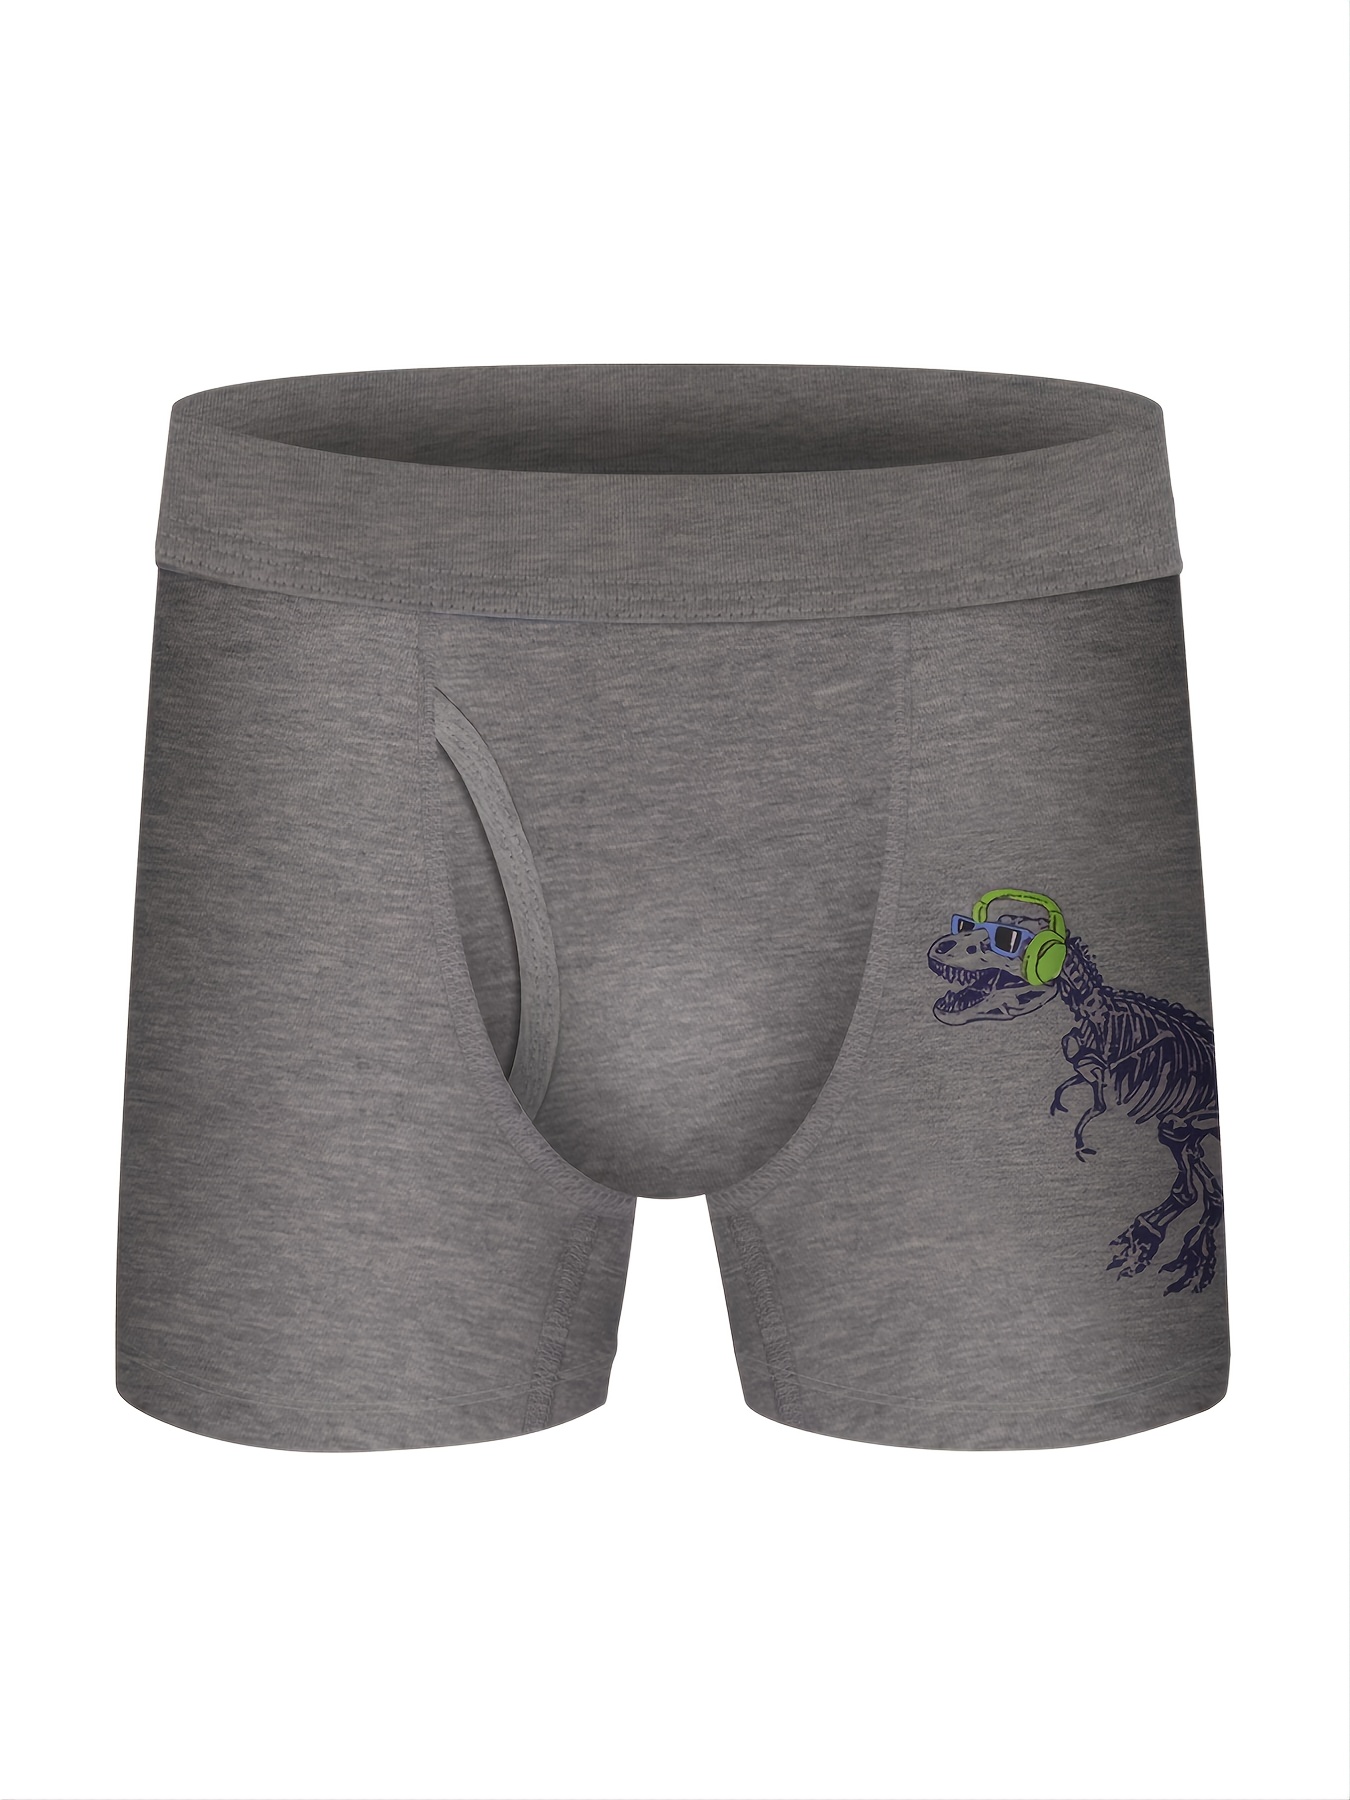 Men's Fun T-Rex Dinosaur Patterned Soft Cotton Boxer Shorts Underwear